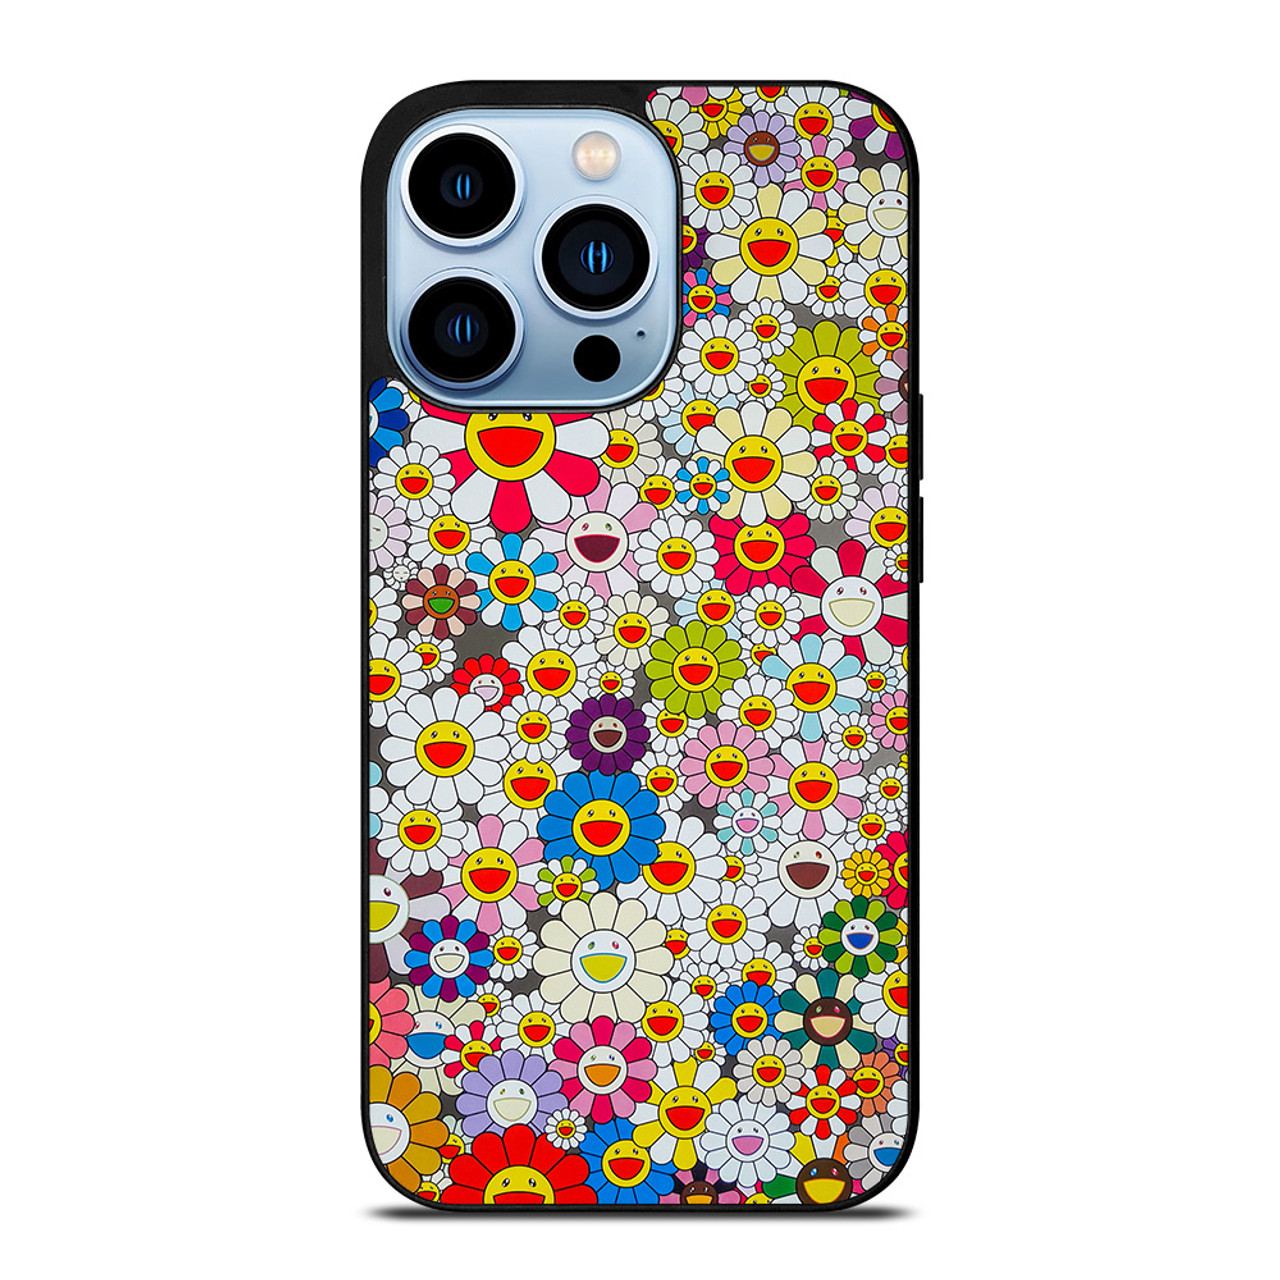 Murakami Flower  IPhone Case 13Pro